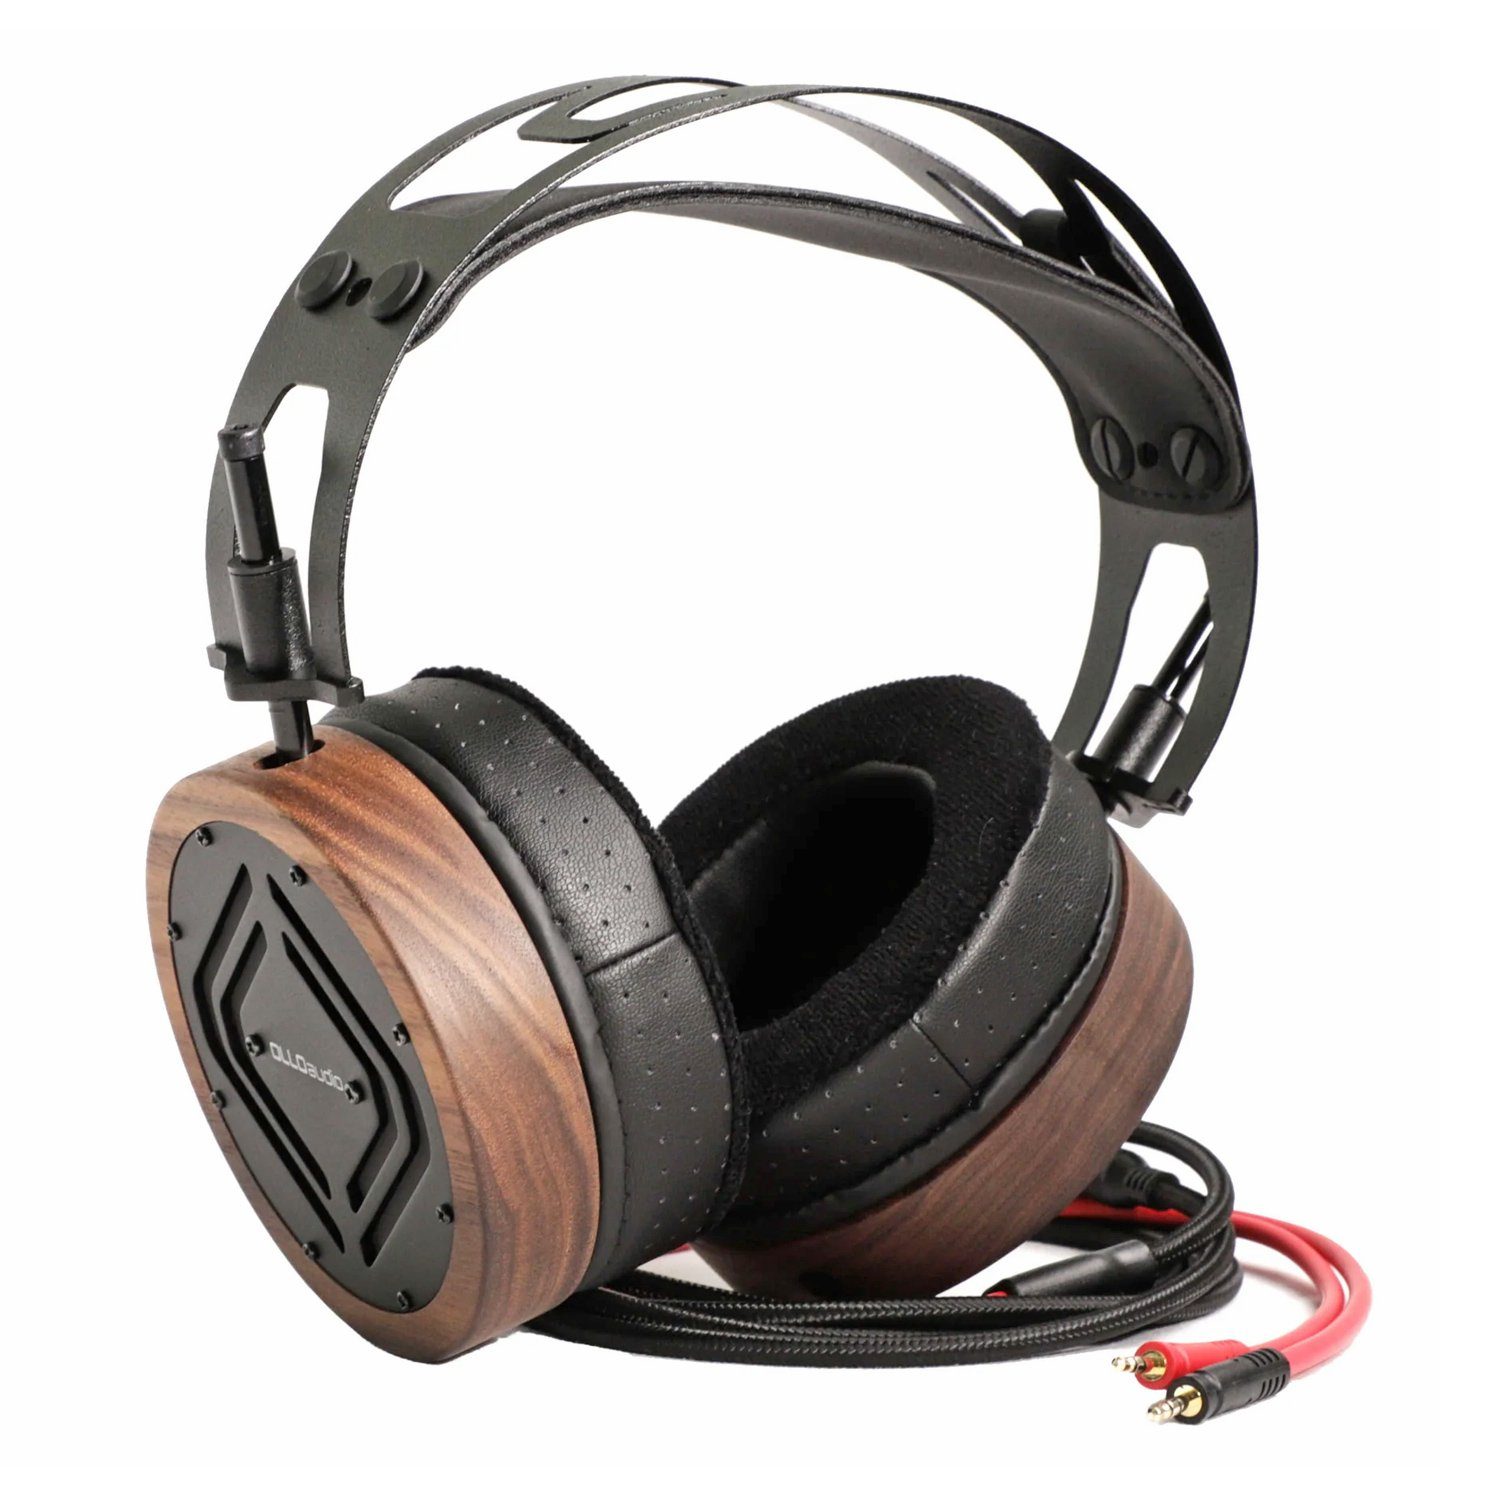 S5X Mixing/Mastering offener Musik, Musik) von Over-Ear-Kopfhörer für binauraler Mixing/Mastering OLLO Studio-Kopfhörer binauraler Audio von (für